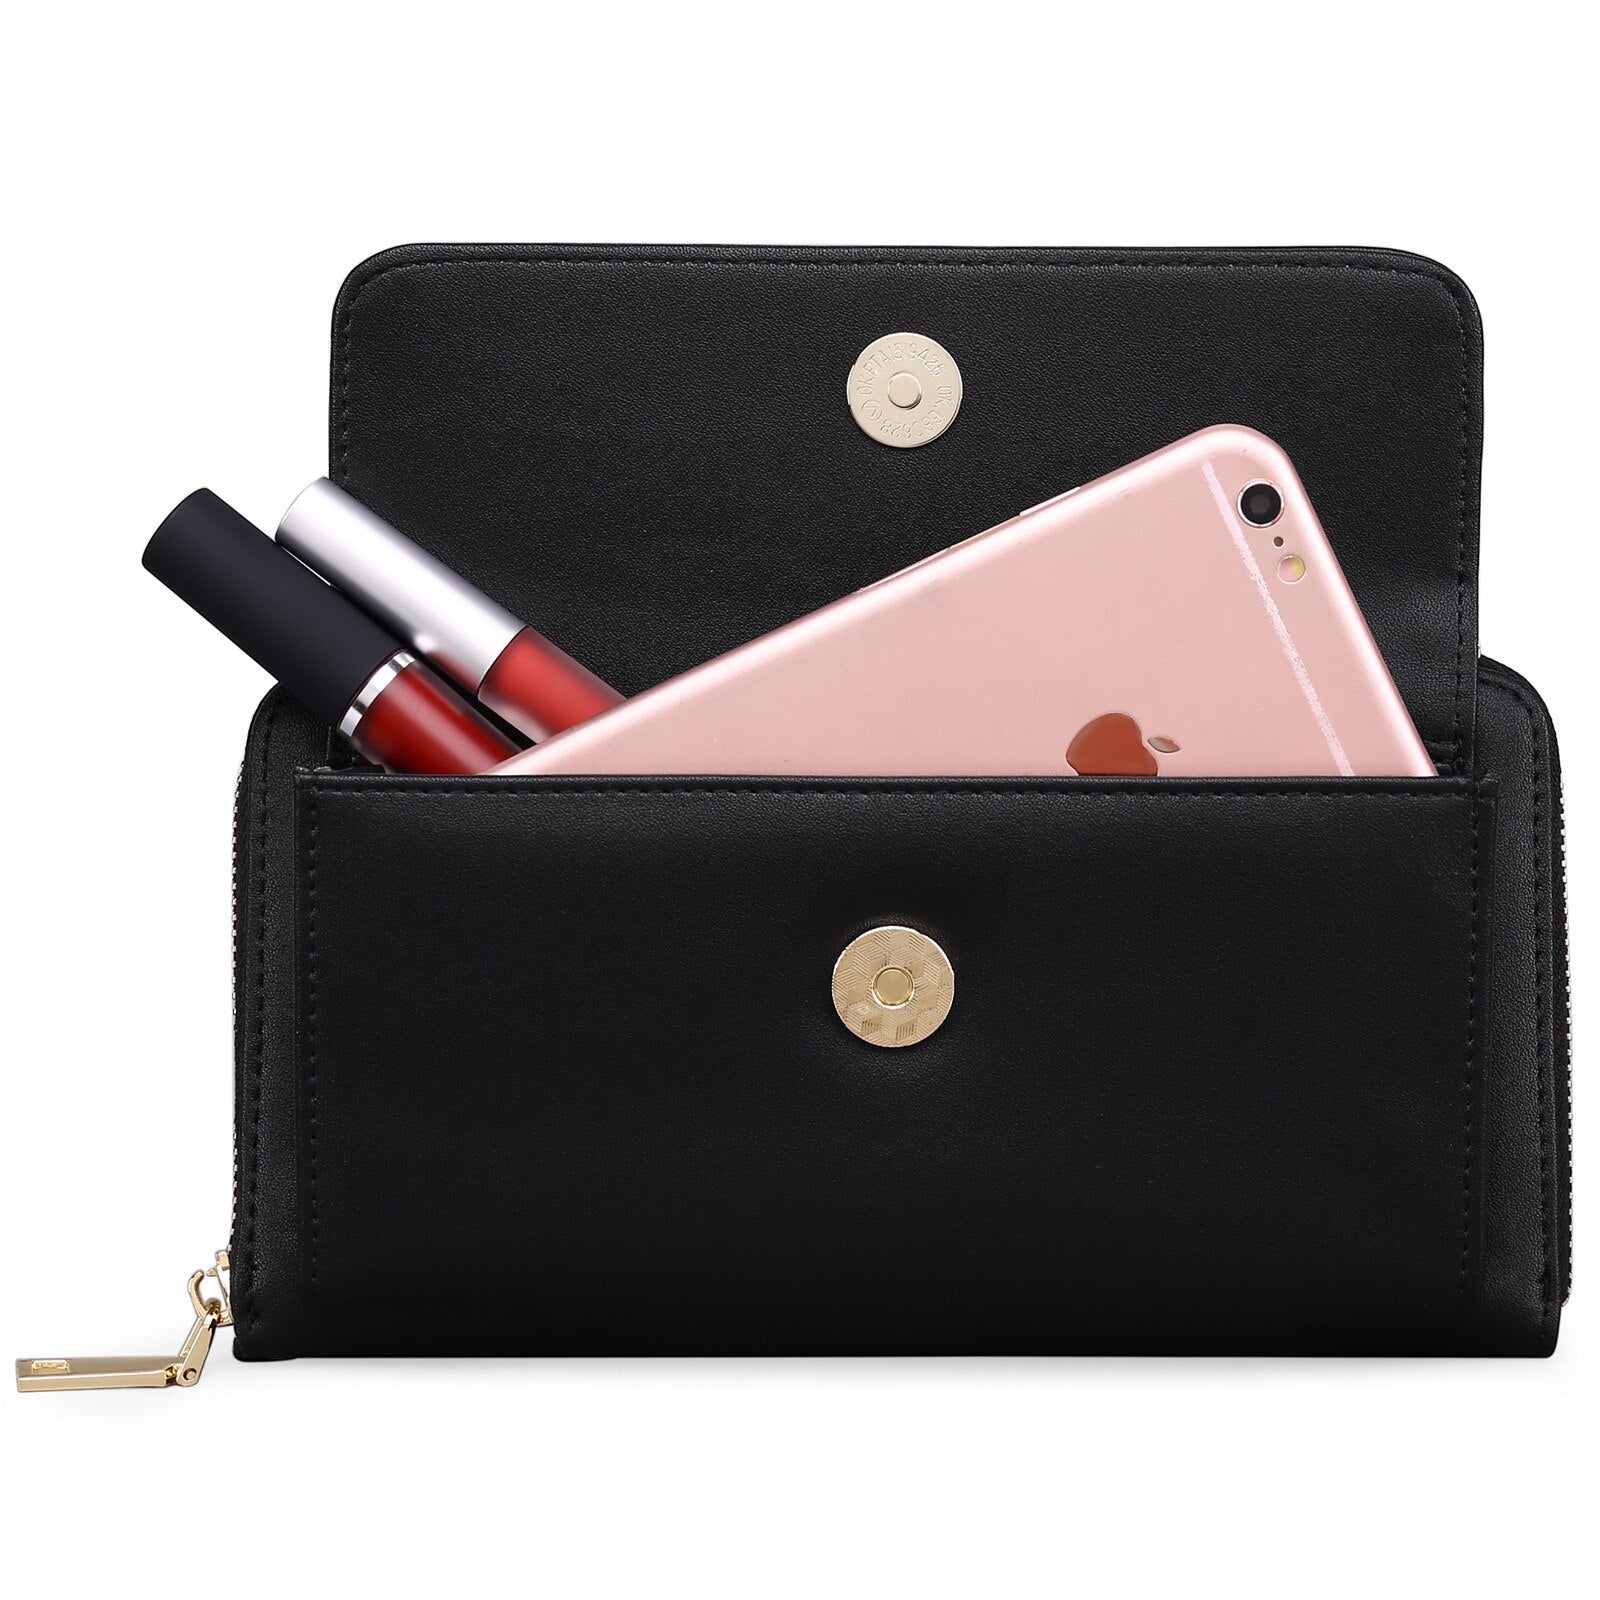 Kylethomasw Brand Designer Women Wallet Genuine Leather Phone Bag Fashion Ladies Crossbody Bag Clutch Bag Credit Card Holder Wallets Women